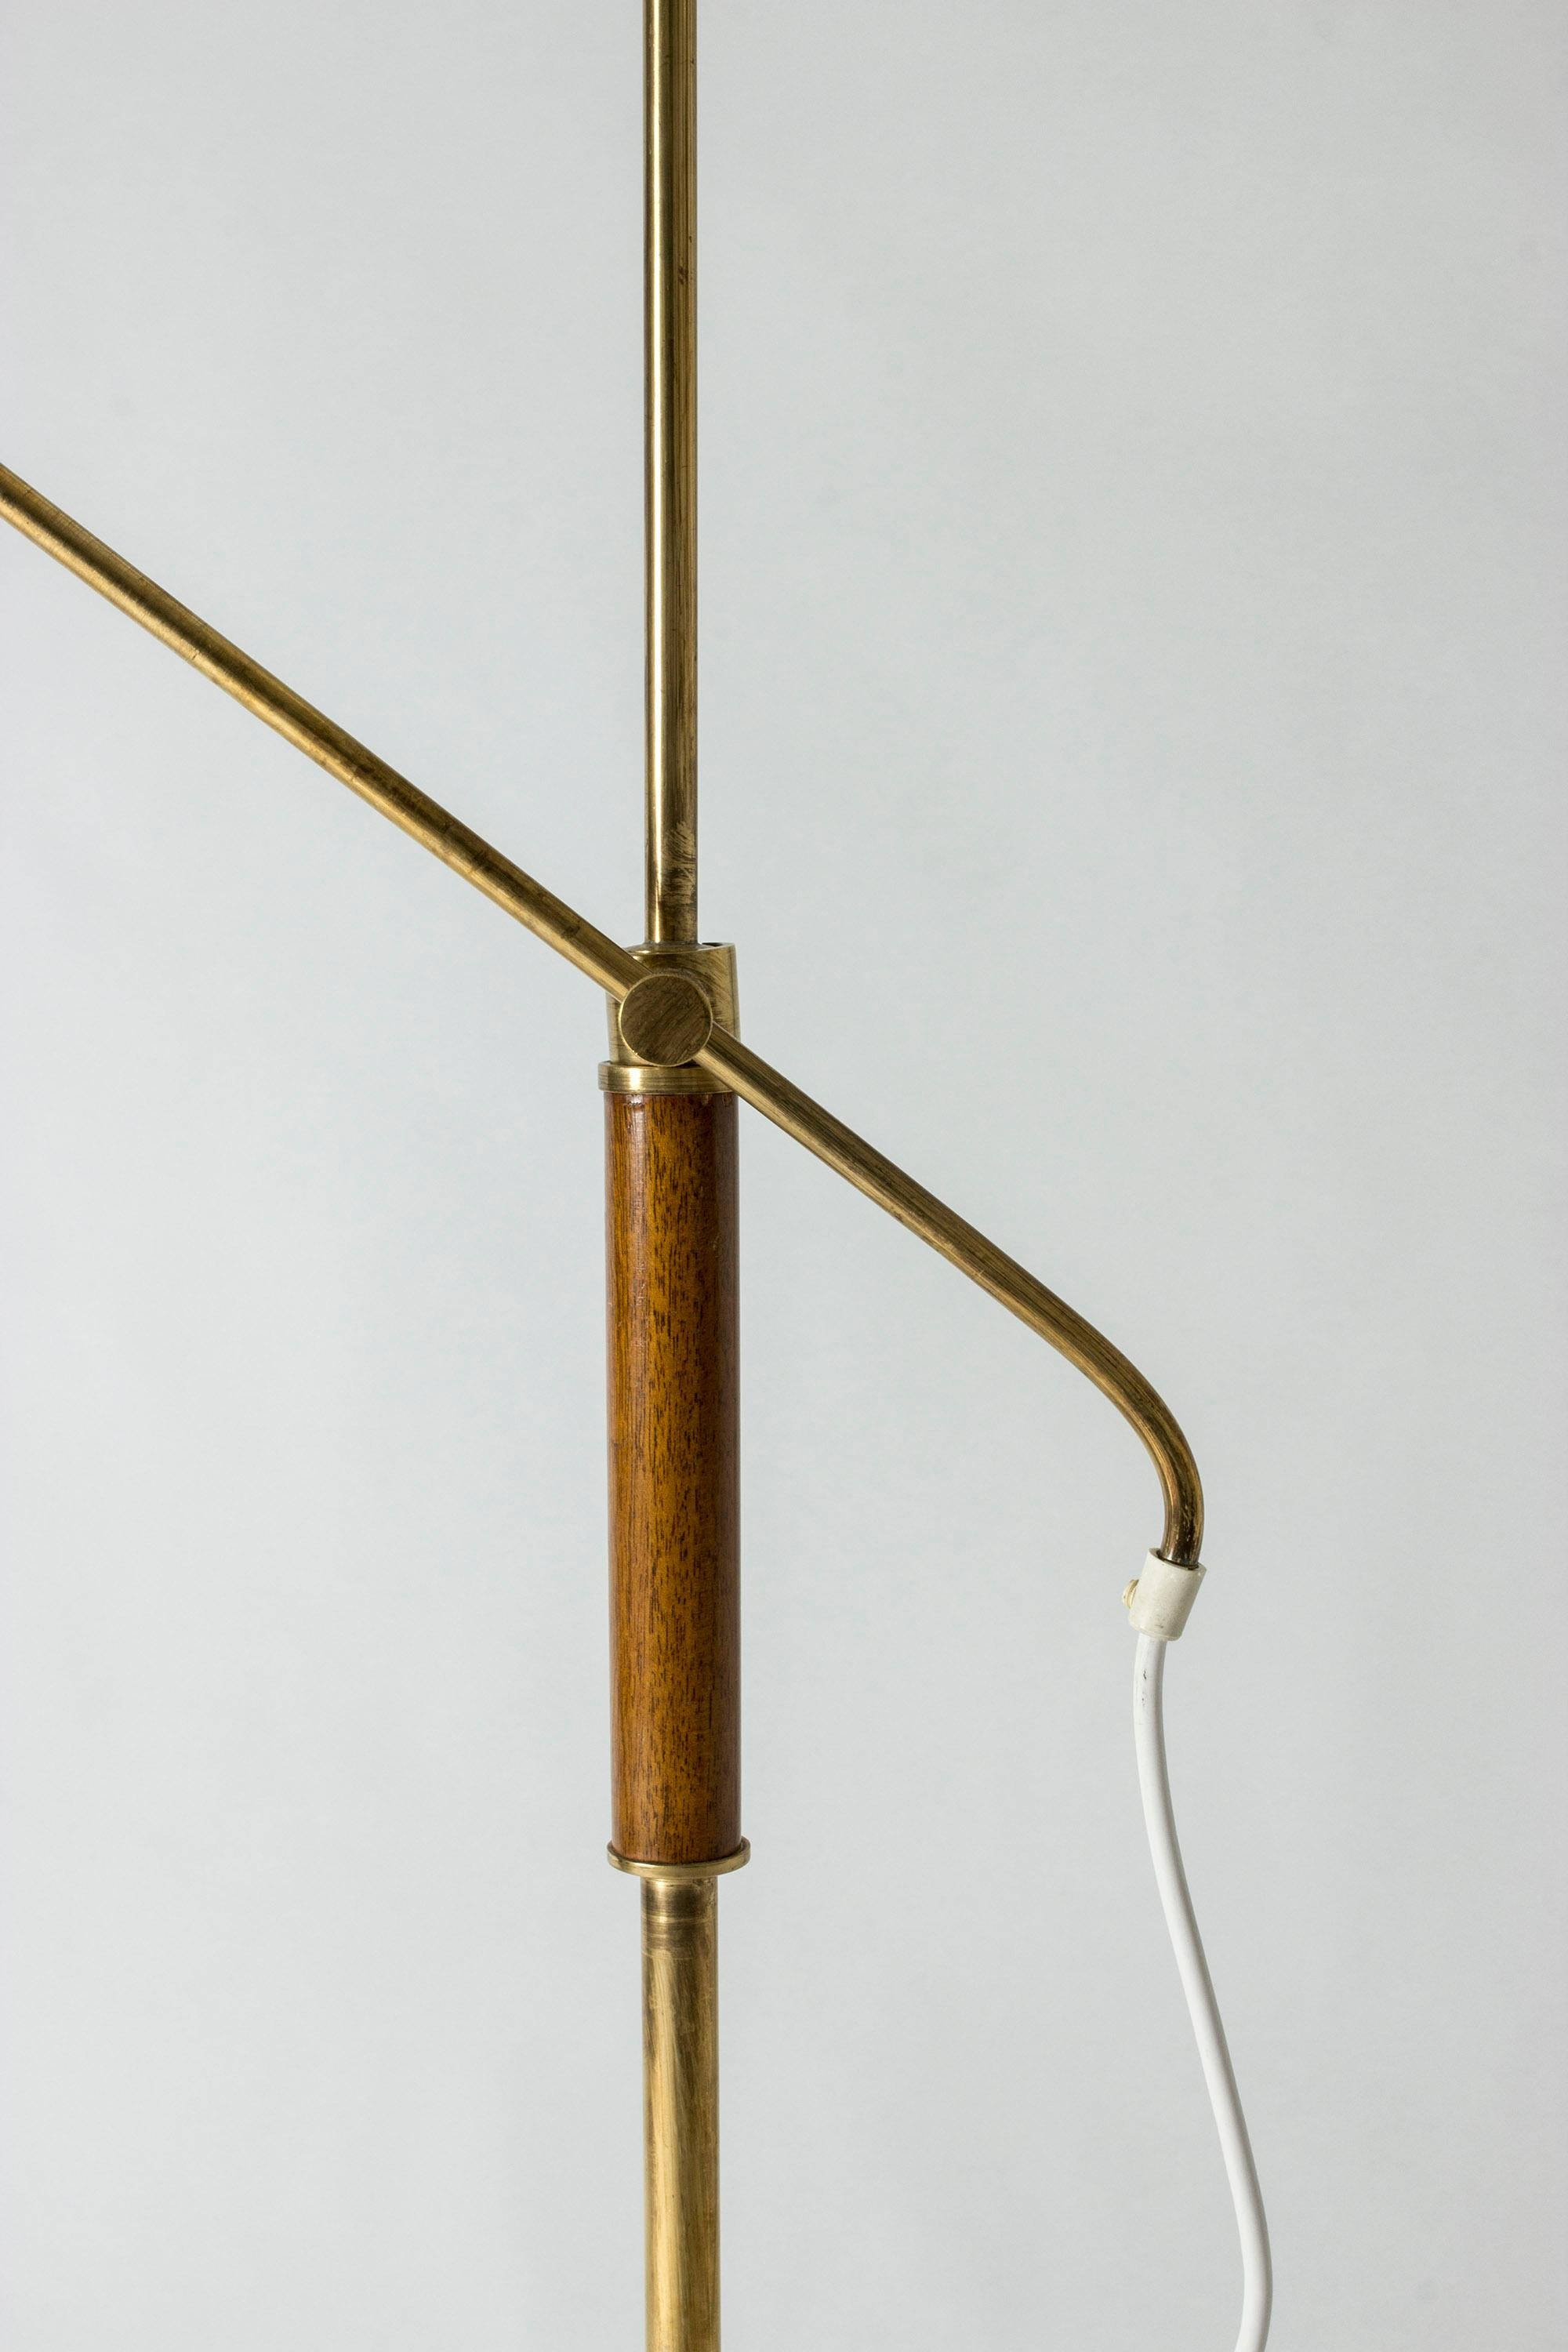 Brass and Wood Swedish Floor Lamp by Bertil Brisborg for Nordiska Kompaniet 3